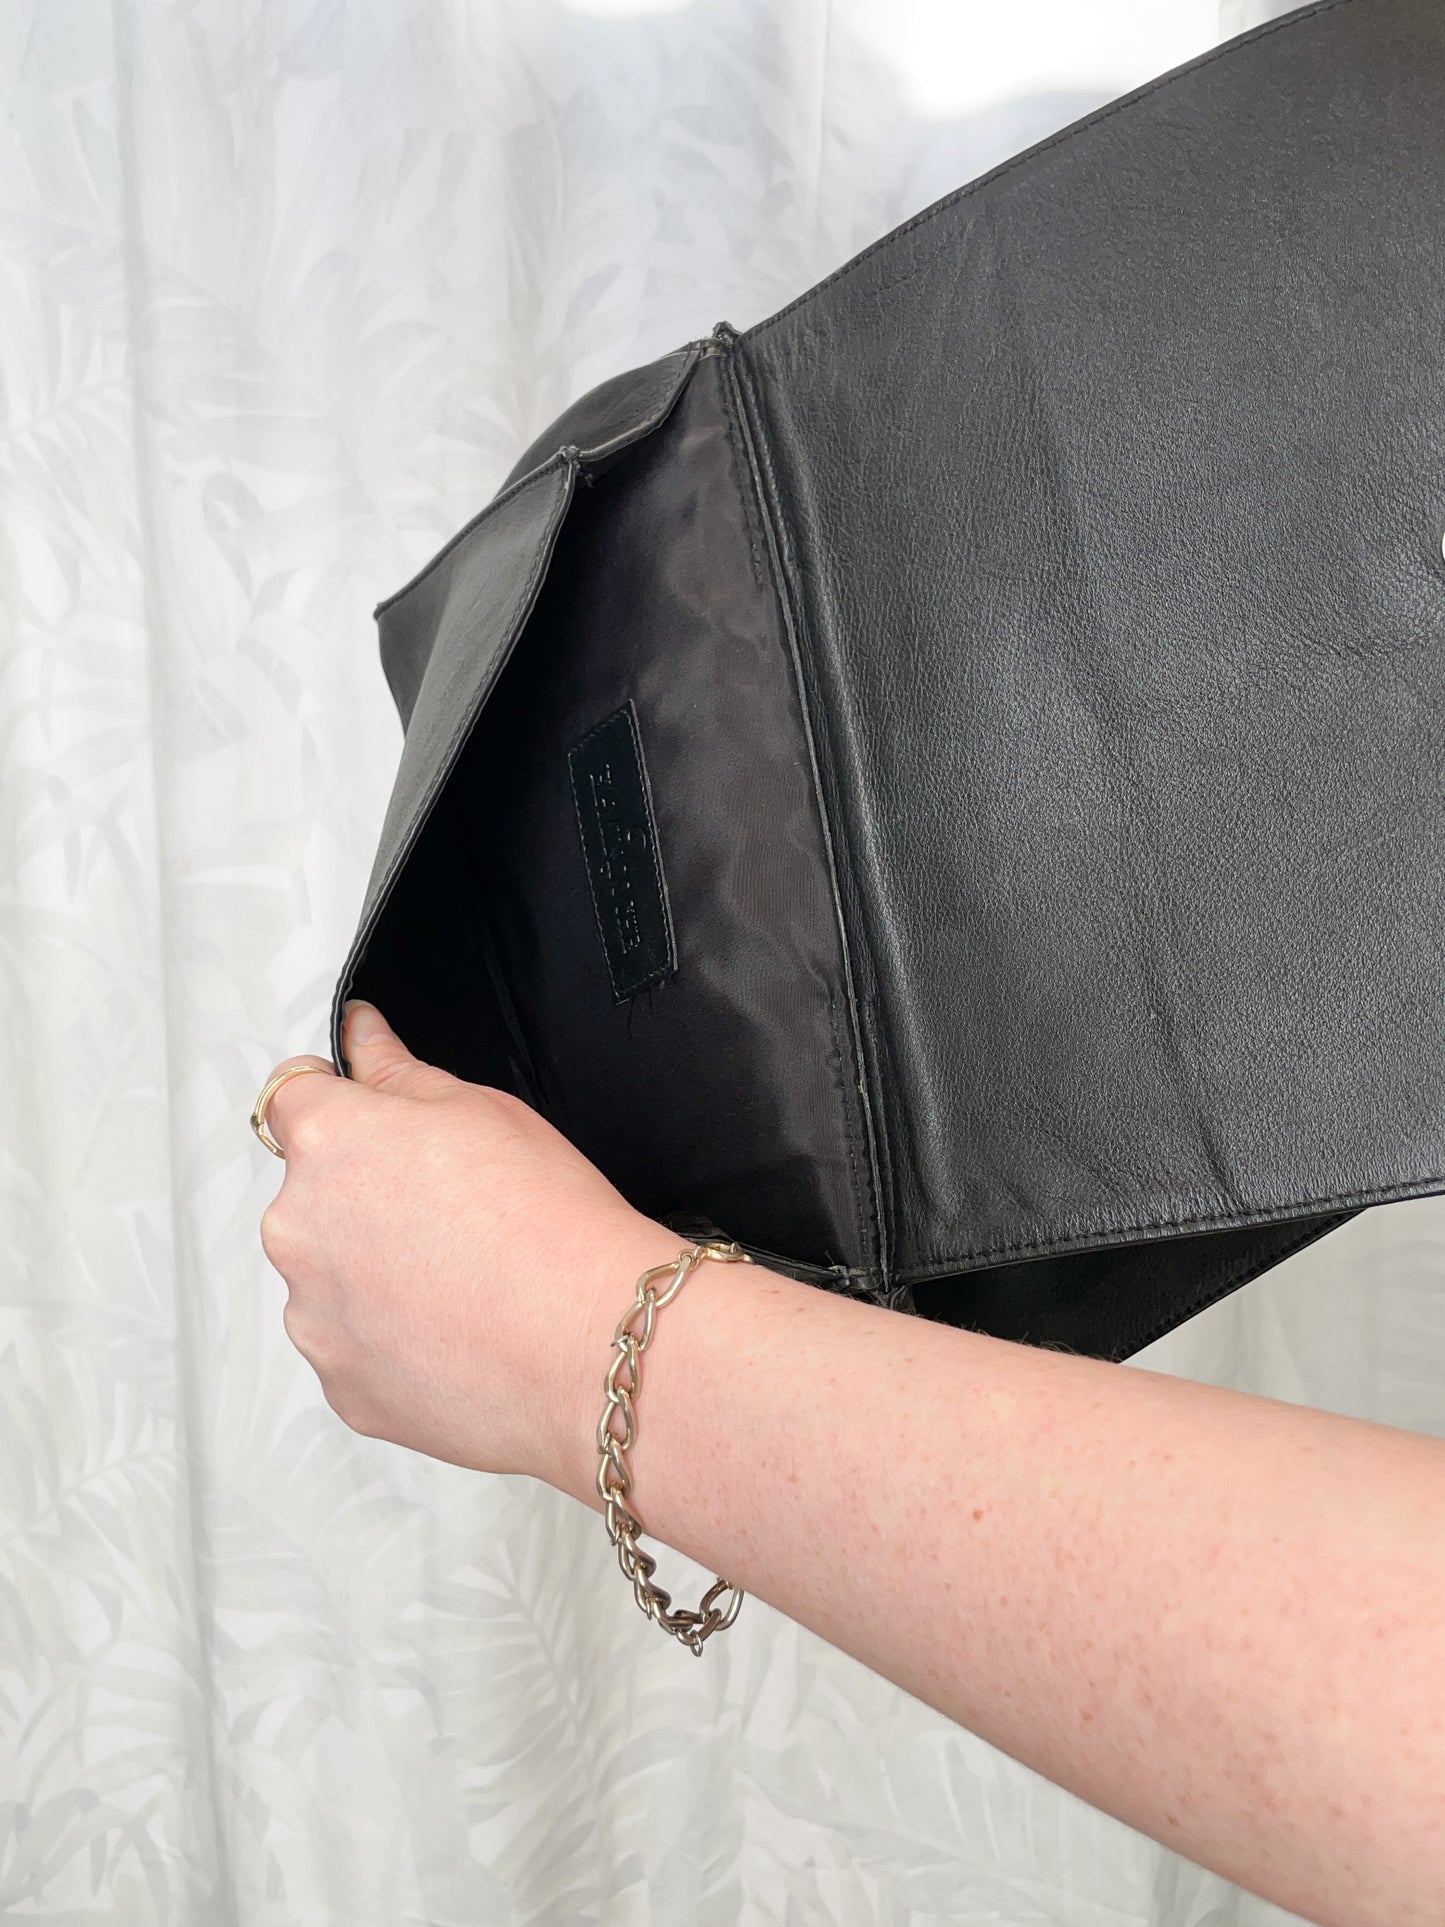 El-Minooche Black Genuine Leather Edgy Envelope Clutch Bag